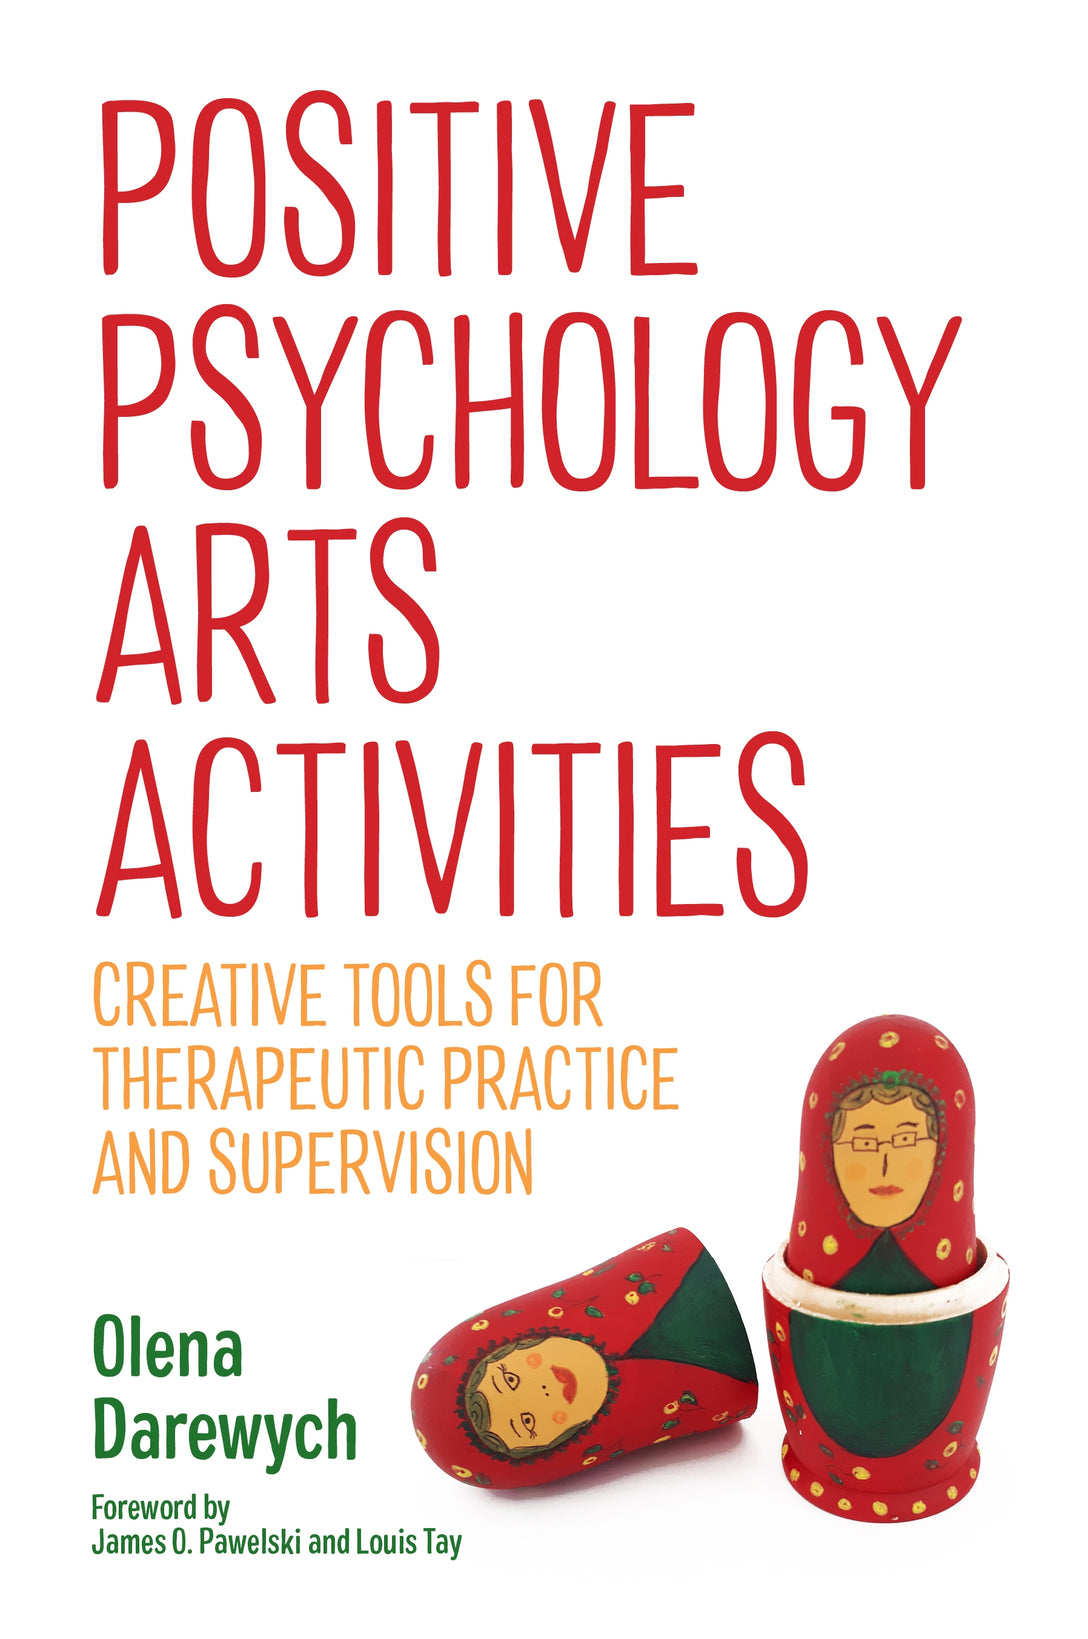 Positive Psychology Arts Activities by Olena Darewych, James O. Pawelski, Louis Tay